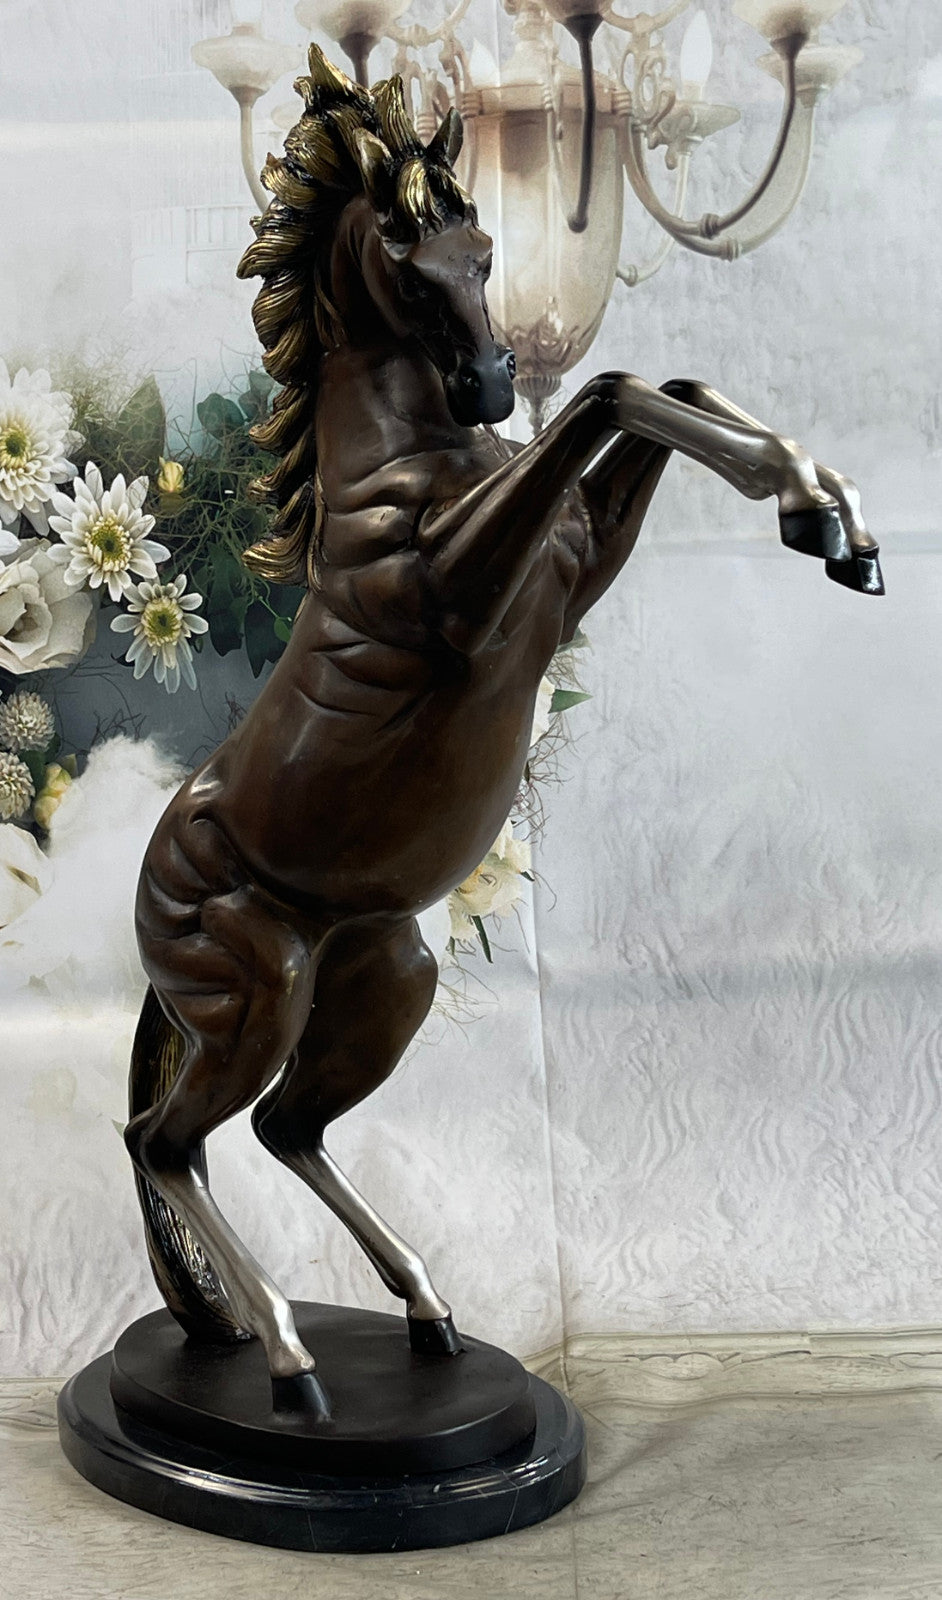 ARABIAN HORSE BRONZE SCULPTURE BY MARIUS LIMITED EDITION STATUE FIGURINE DÉCOR